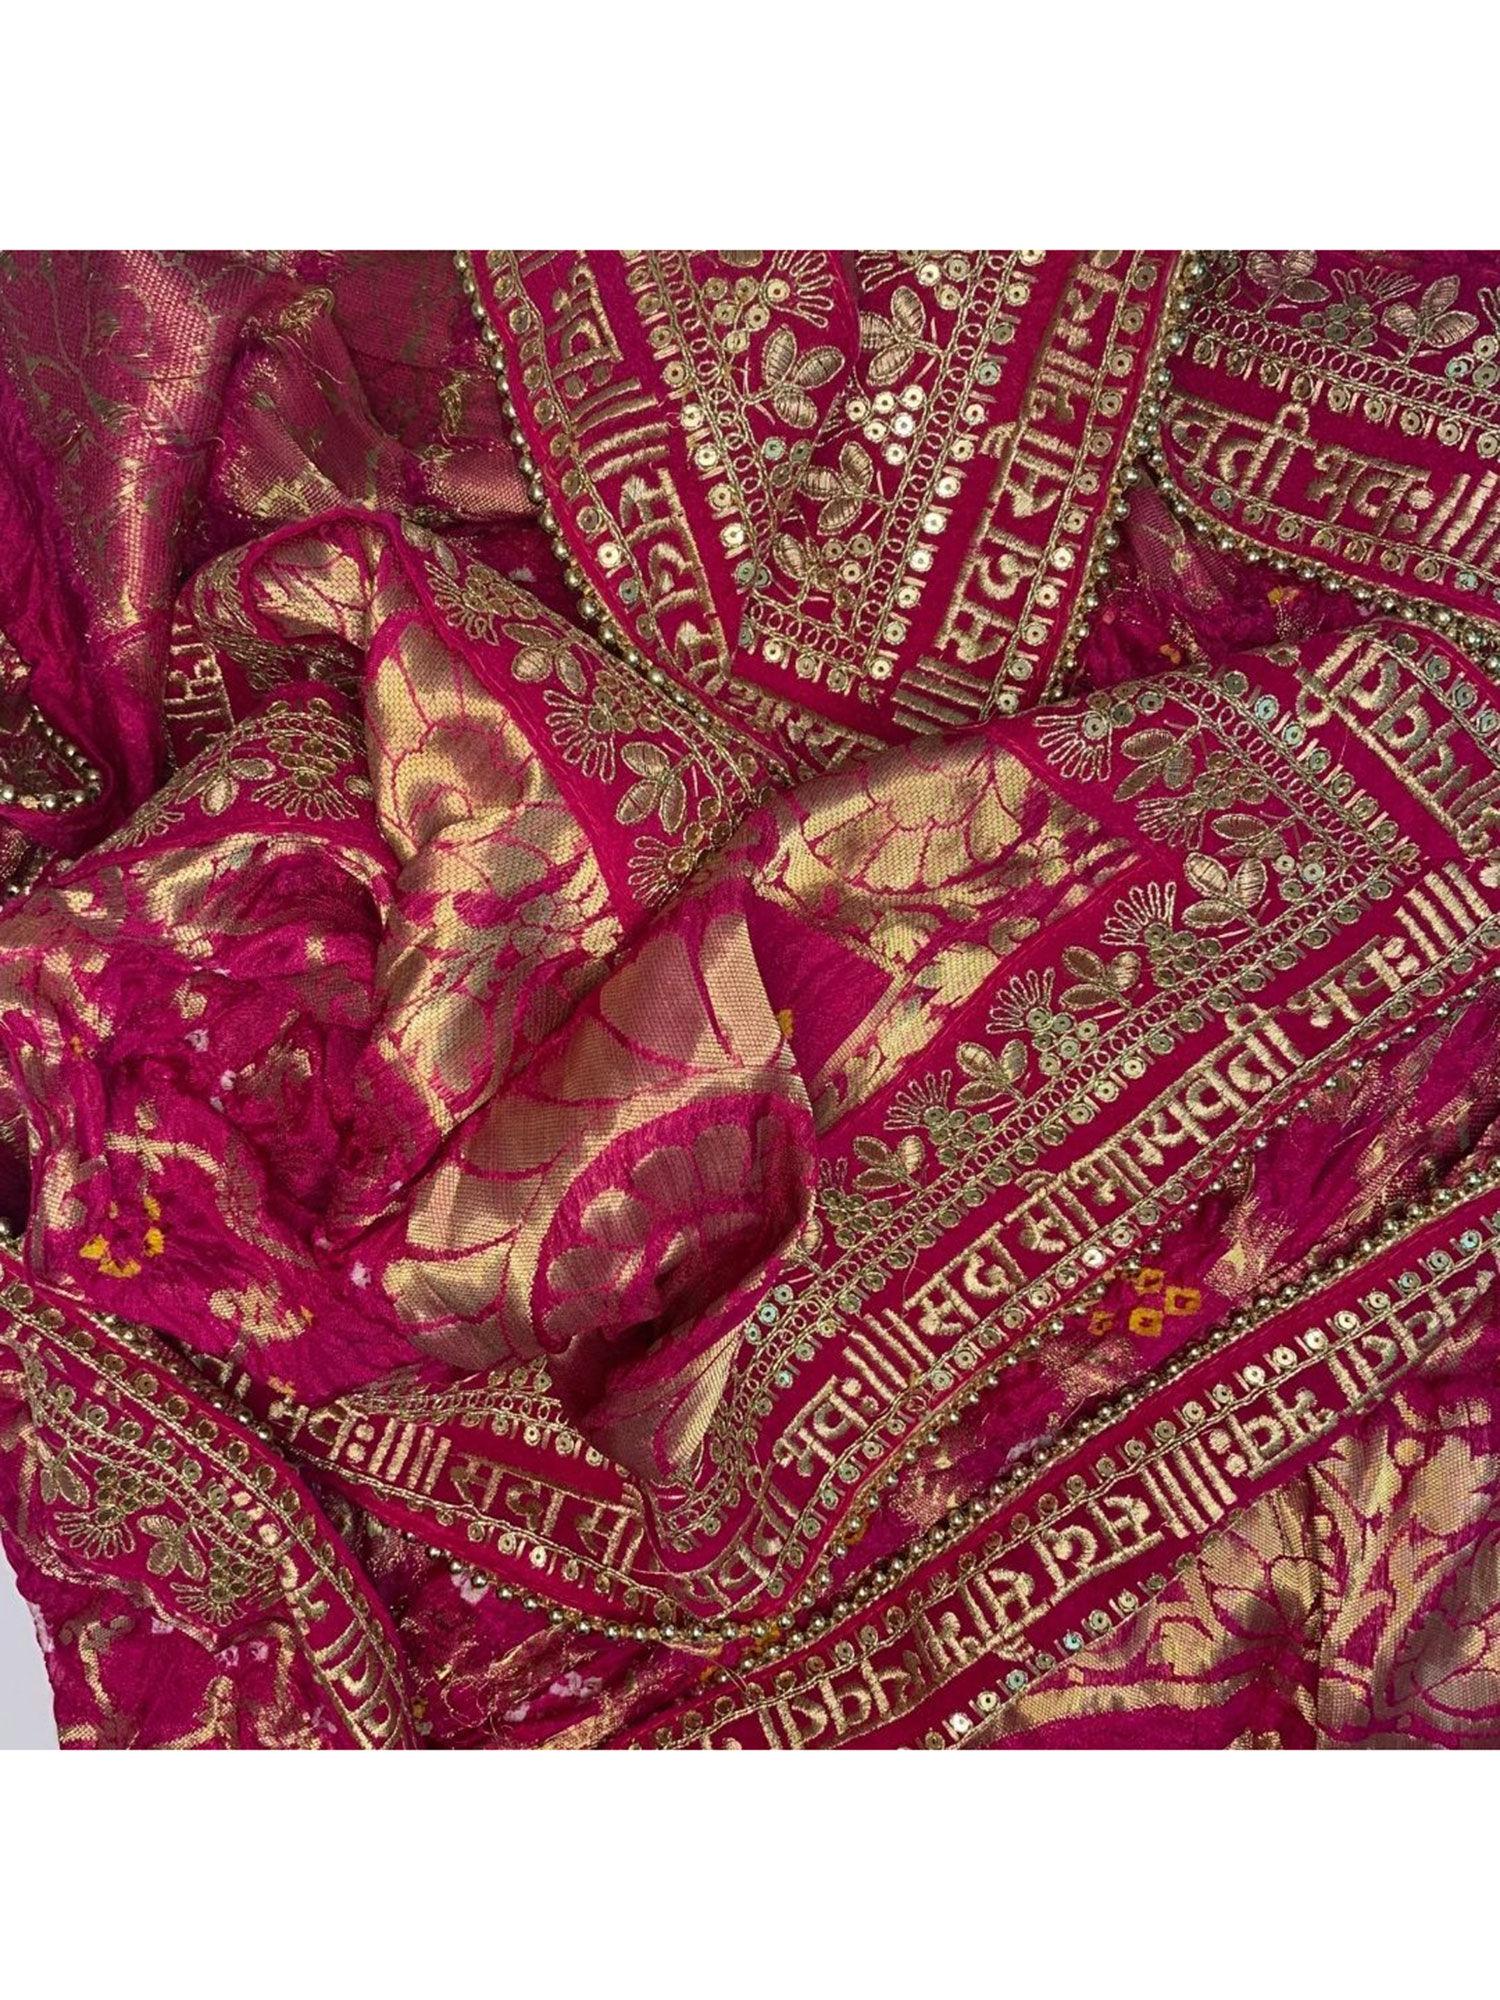 Traditional Bridal Pink Saubhgyavati Bandhej Dupatta